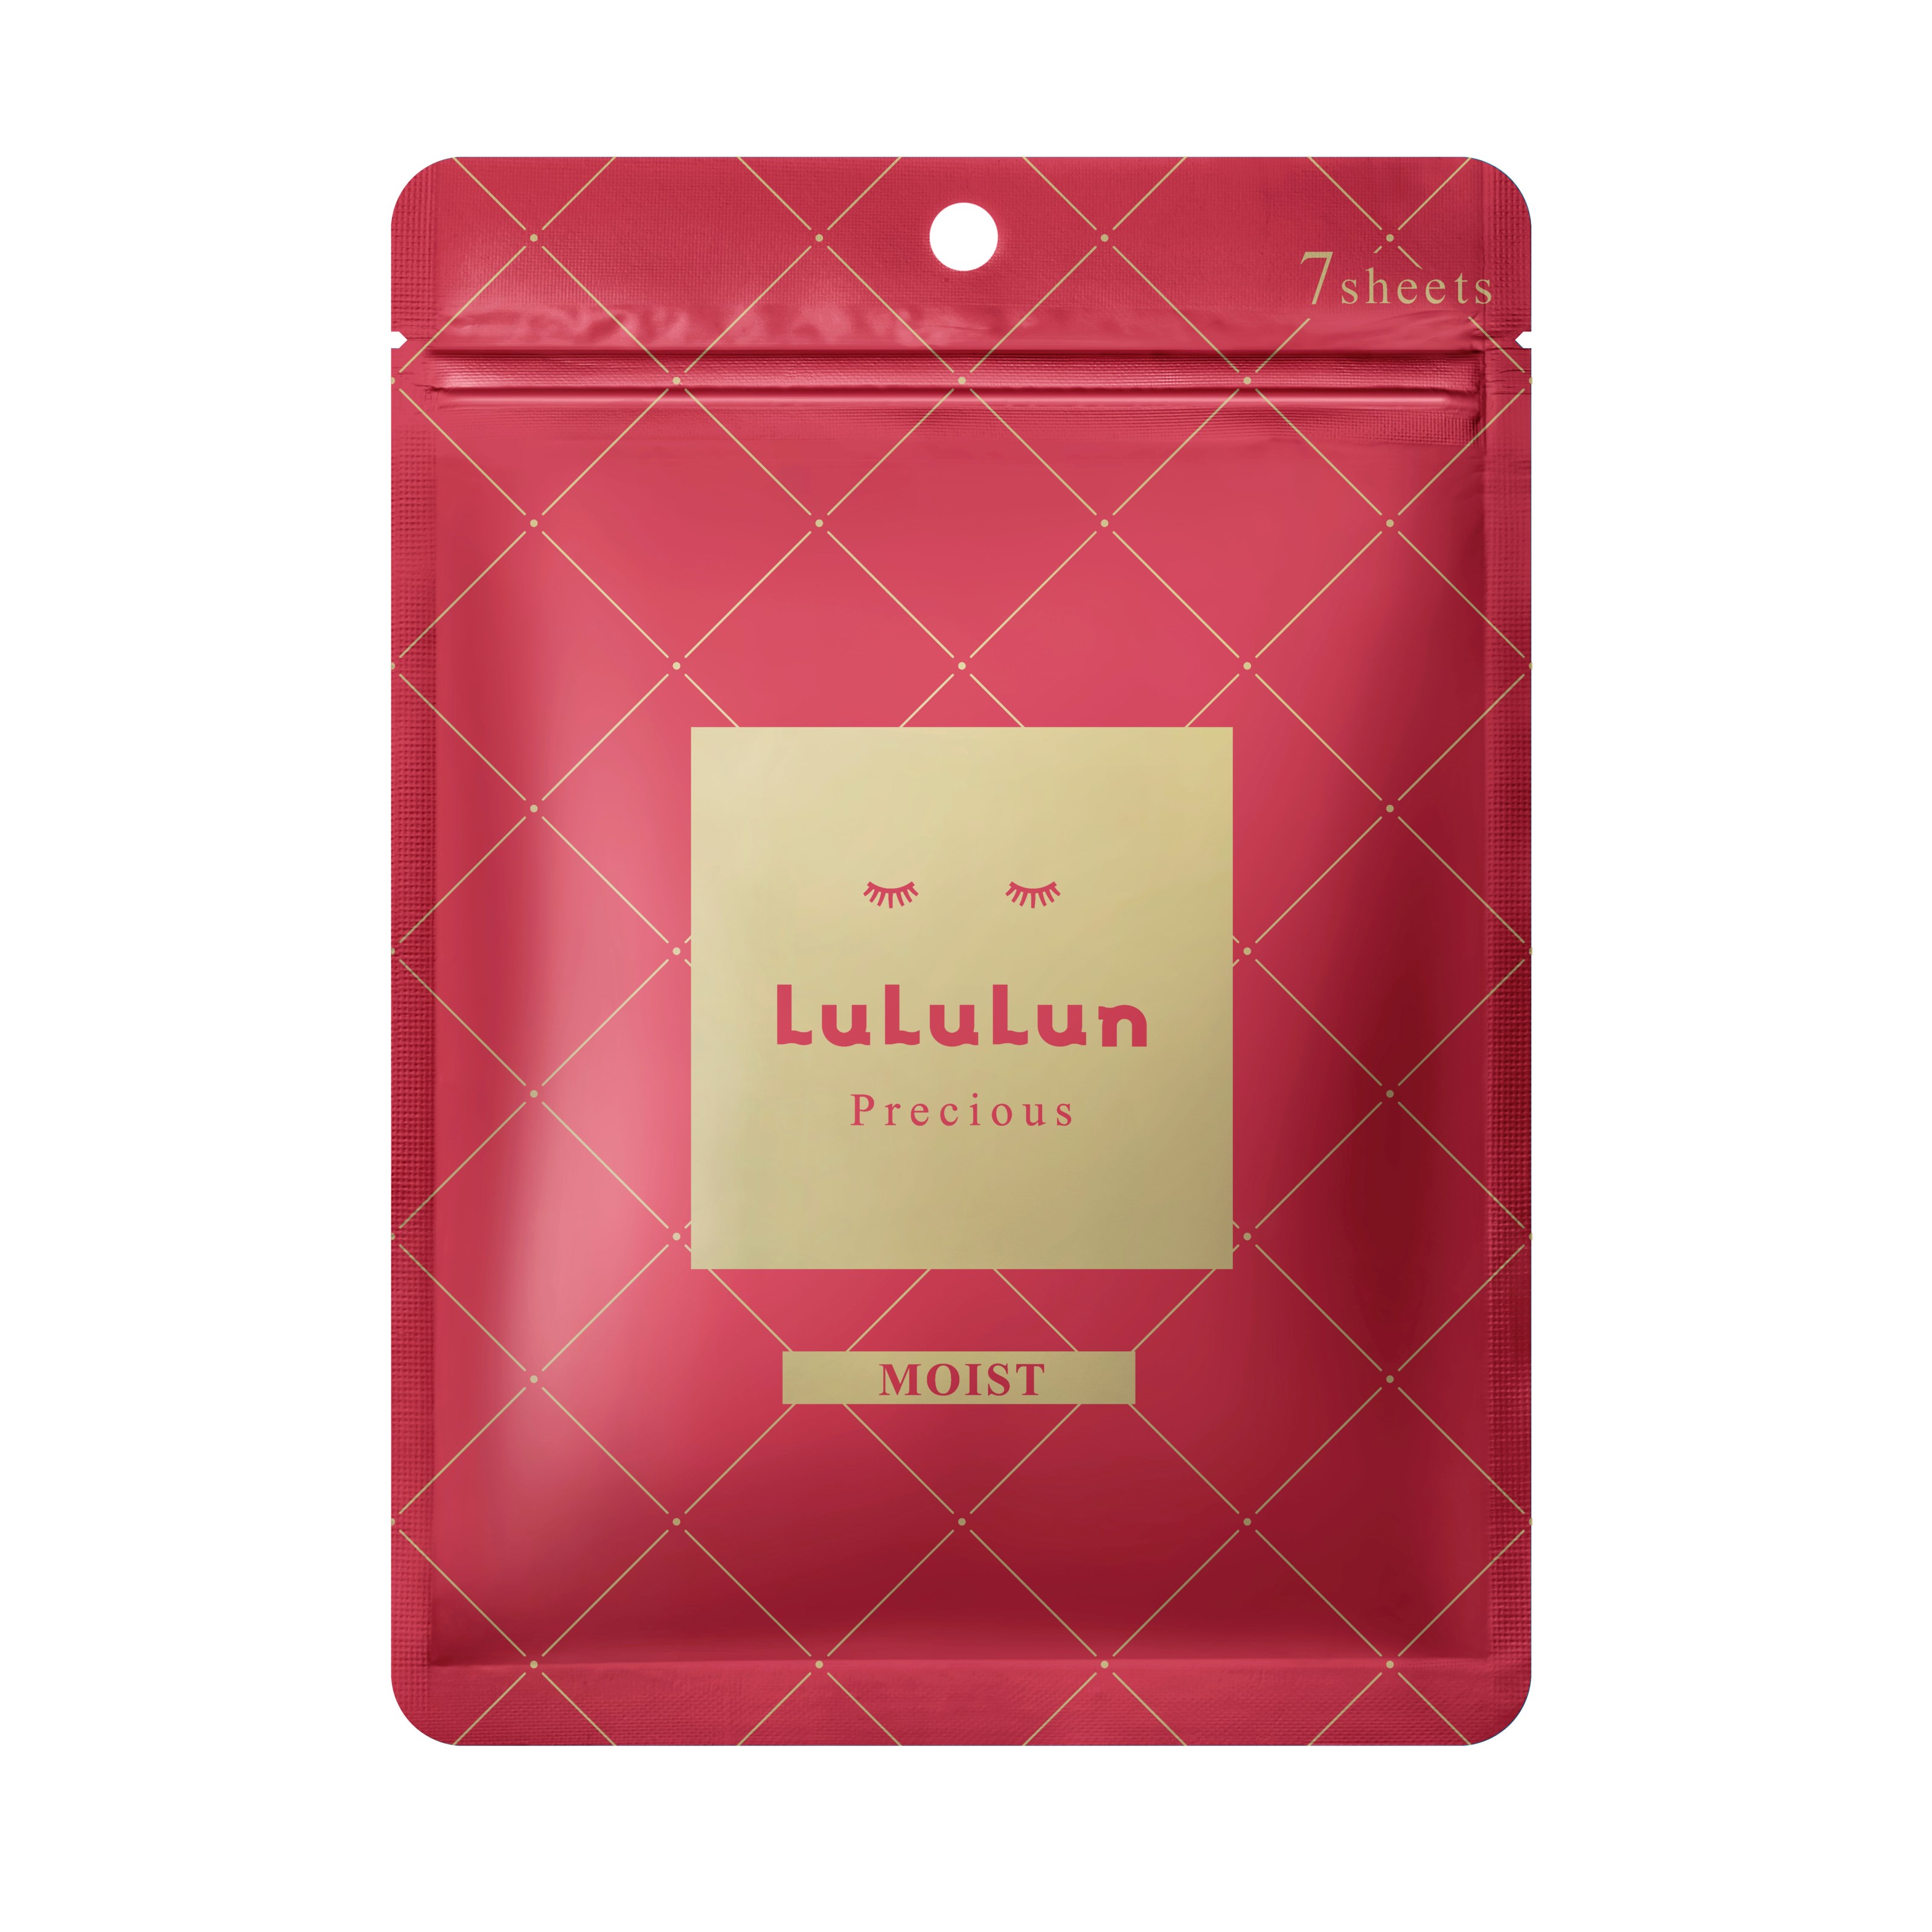 LuLuLun Precious Sheet Mask Red 7 st